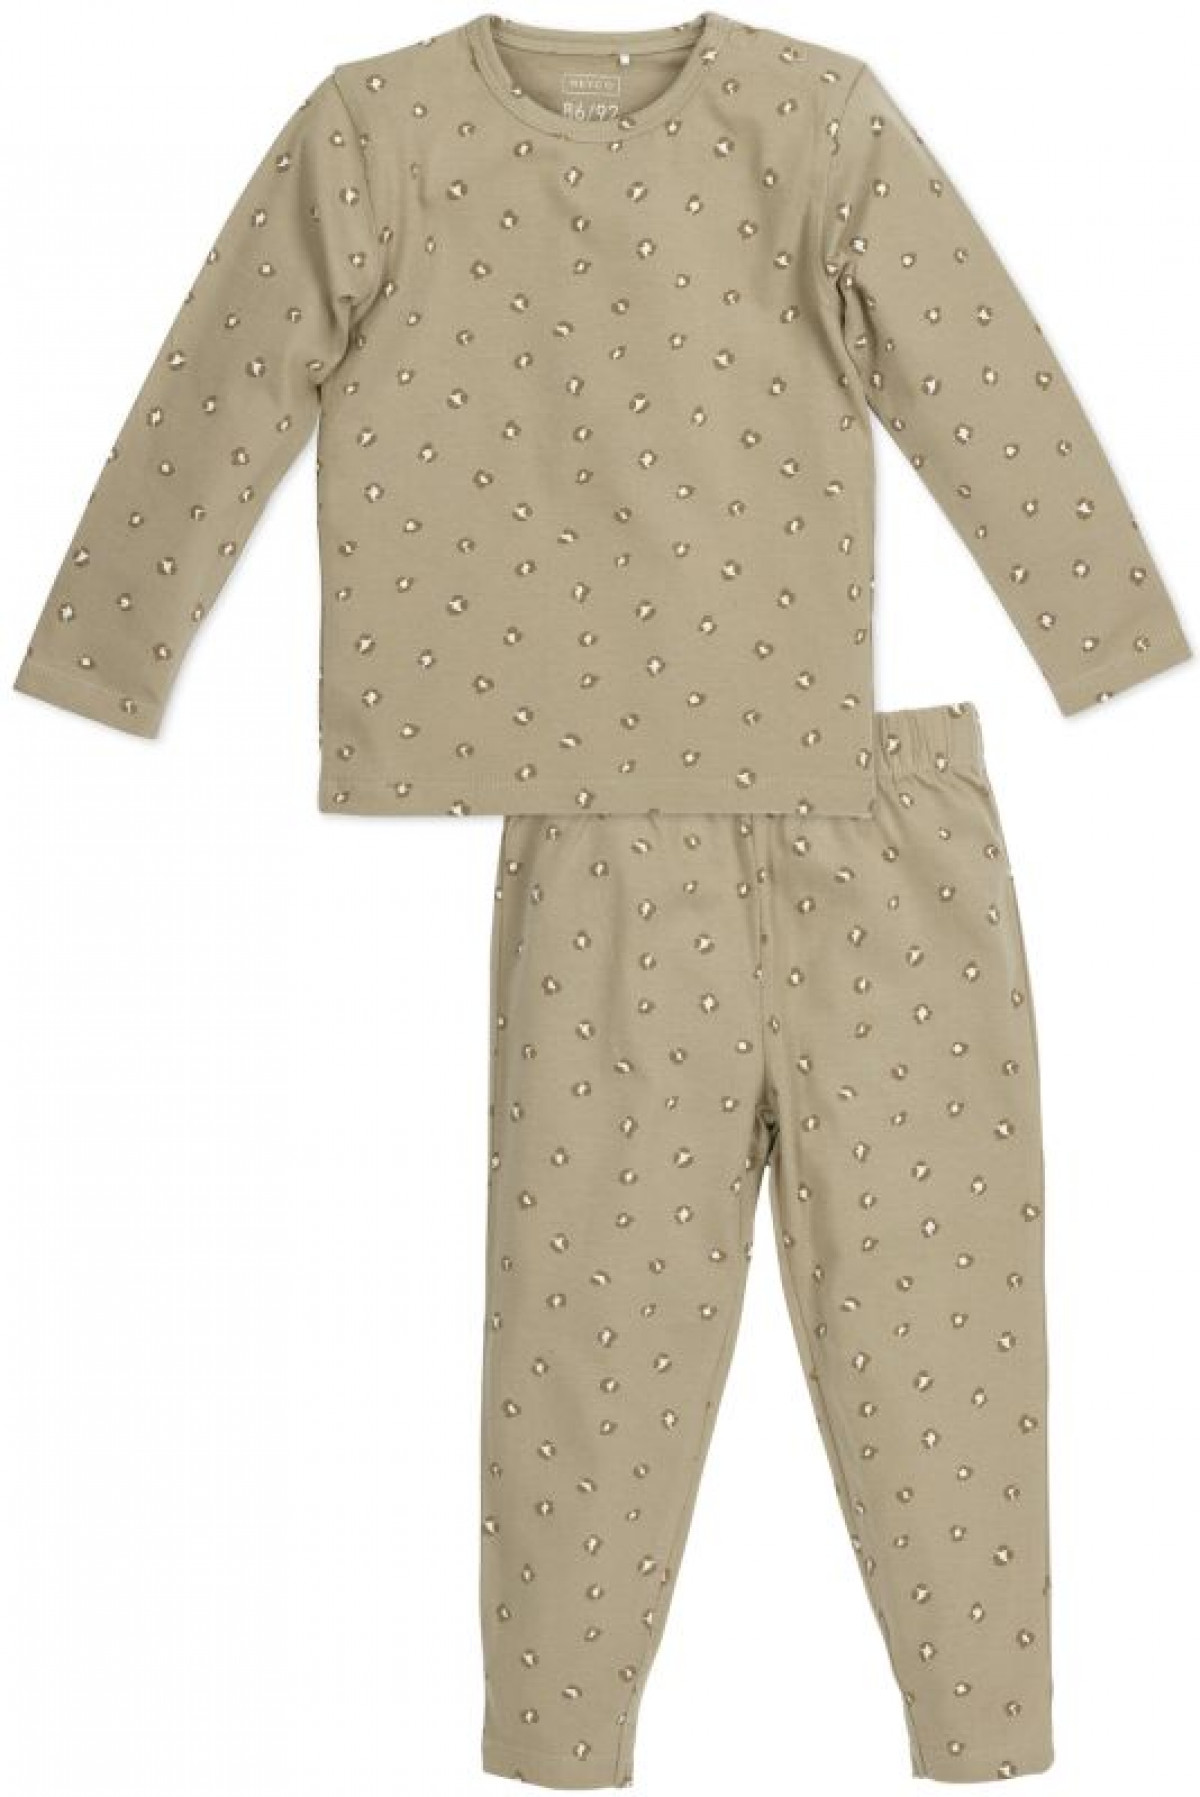 Pyjama 2pièces Mini Panther Sand - Boutique Toup'tibou - photo 6